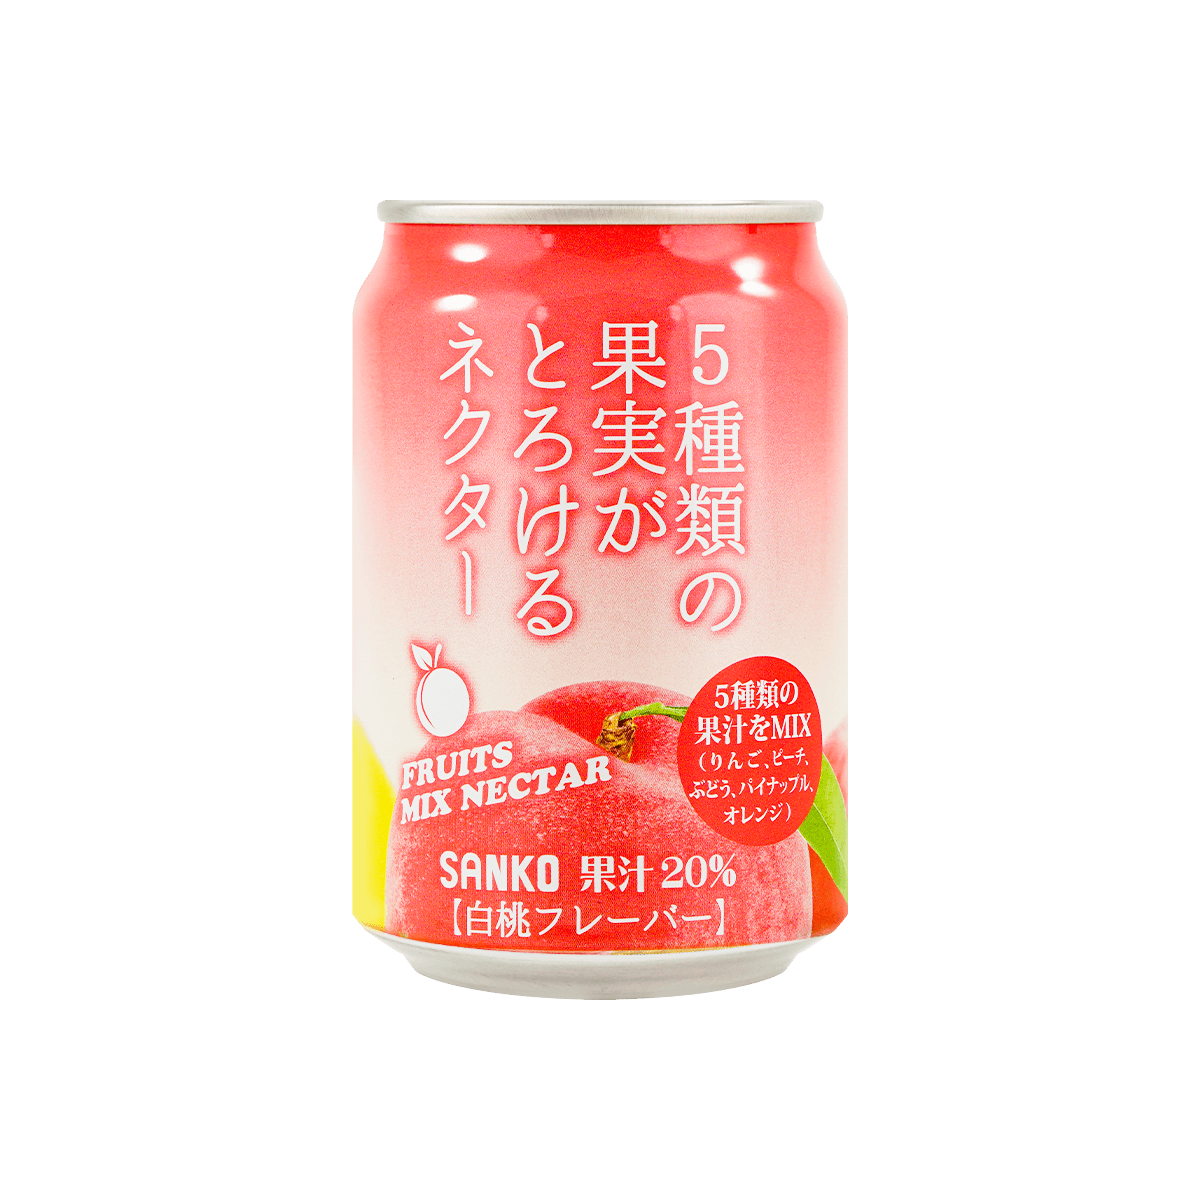 SANKO 5种水果 蜜桃混合果汁 280ml